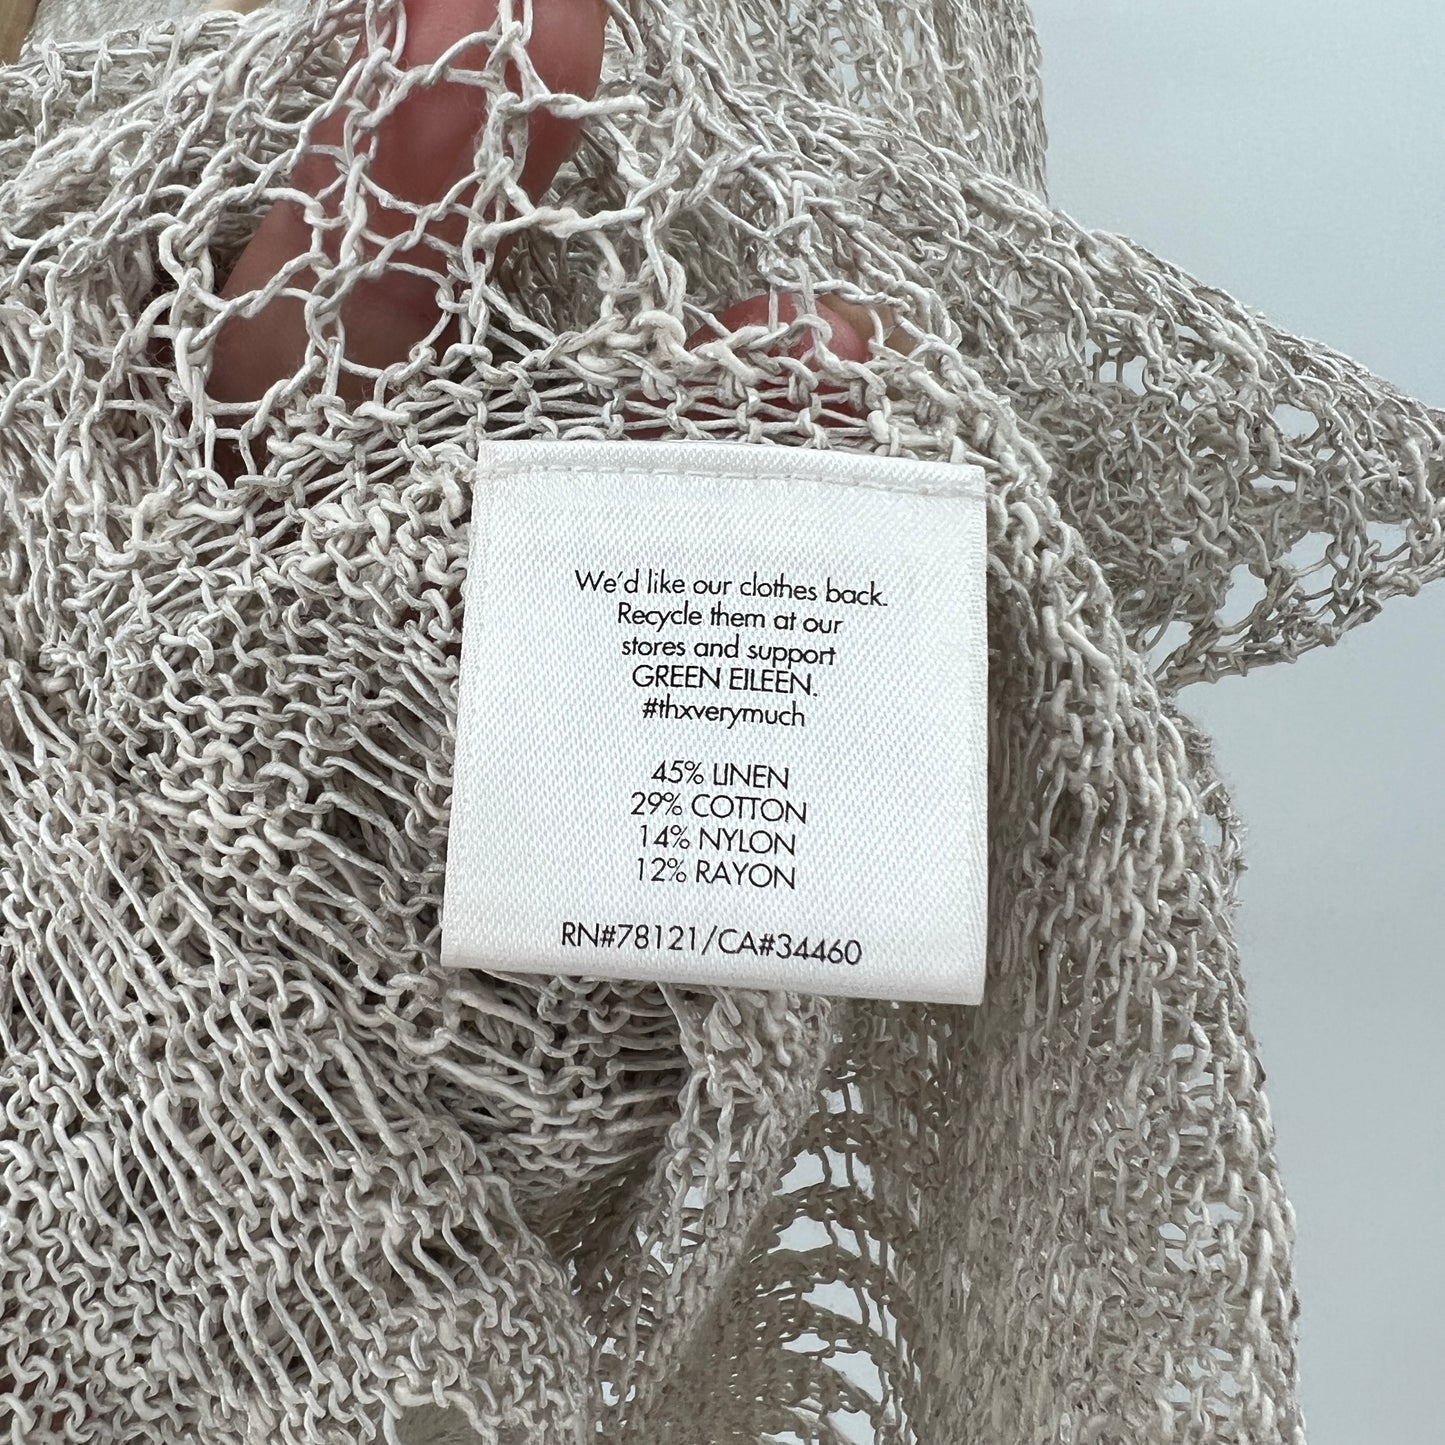 Eileen Fisher Loose Knit Linen Blend Asymmetrical Sweater PL